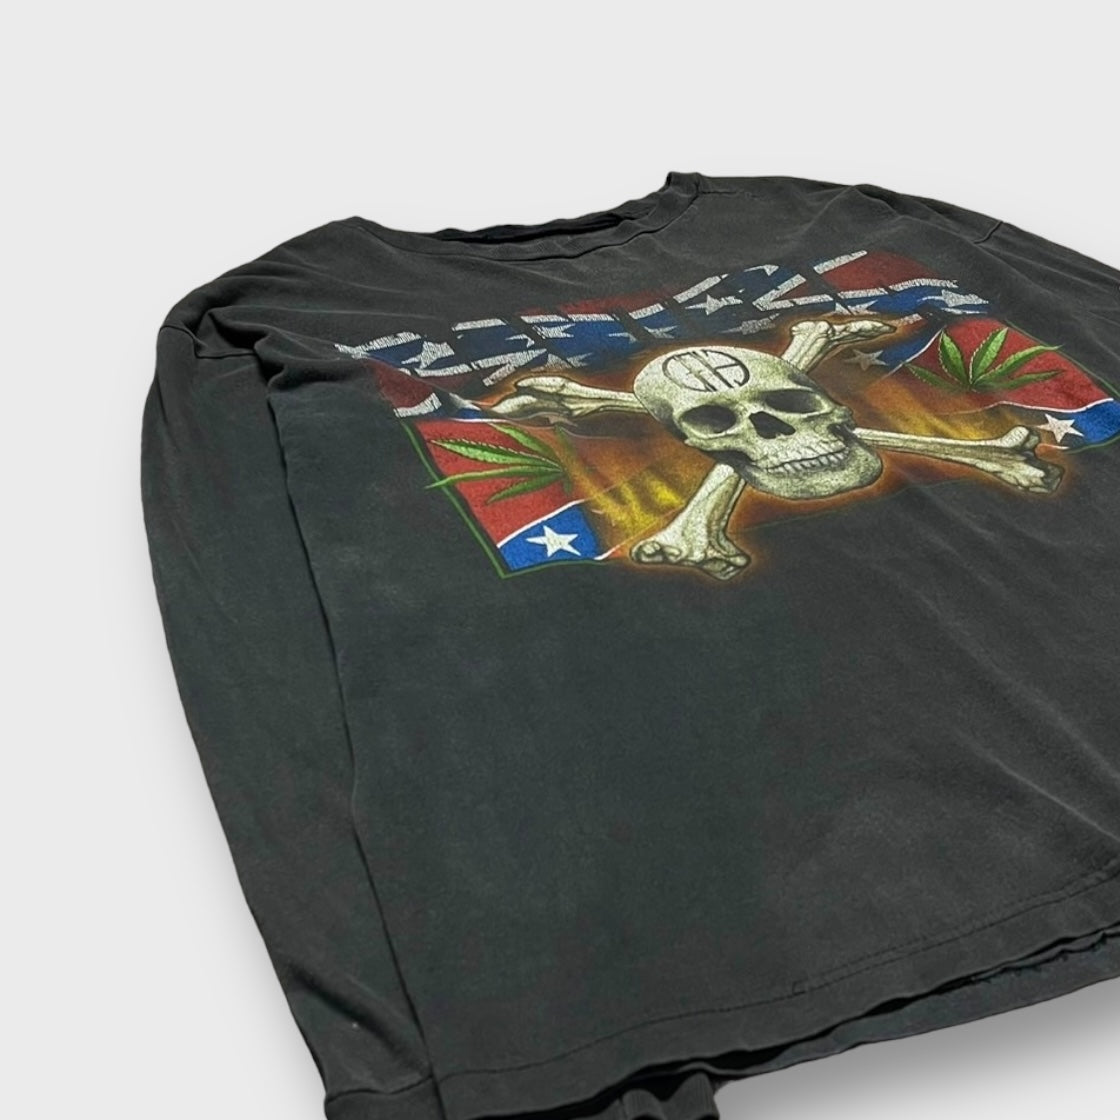 90's "PANTERA" Cowboys from Hell l/s t-shirt